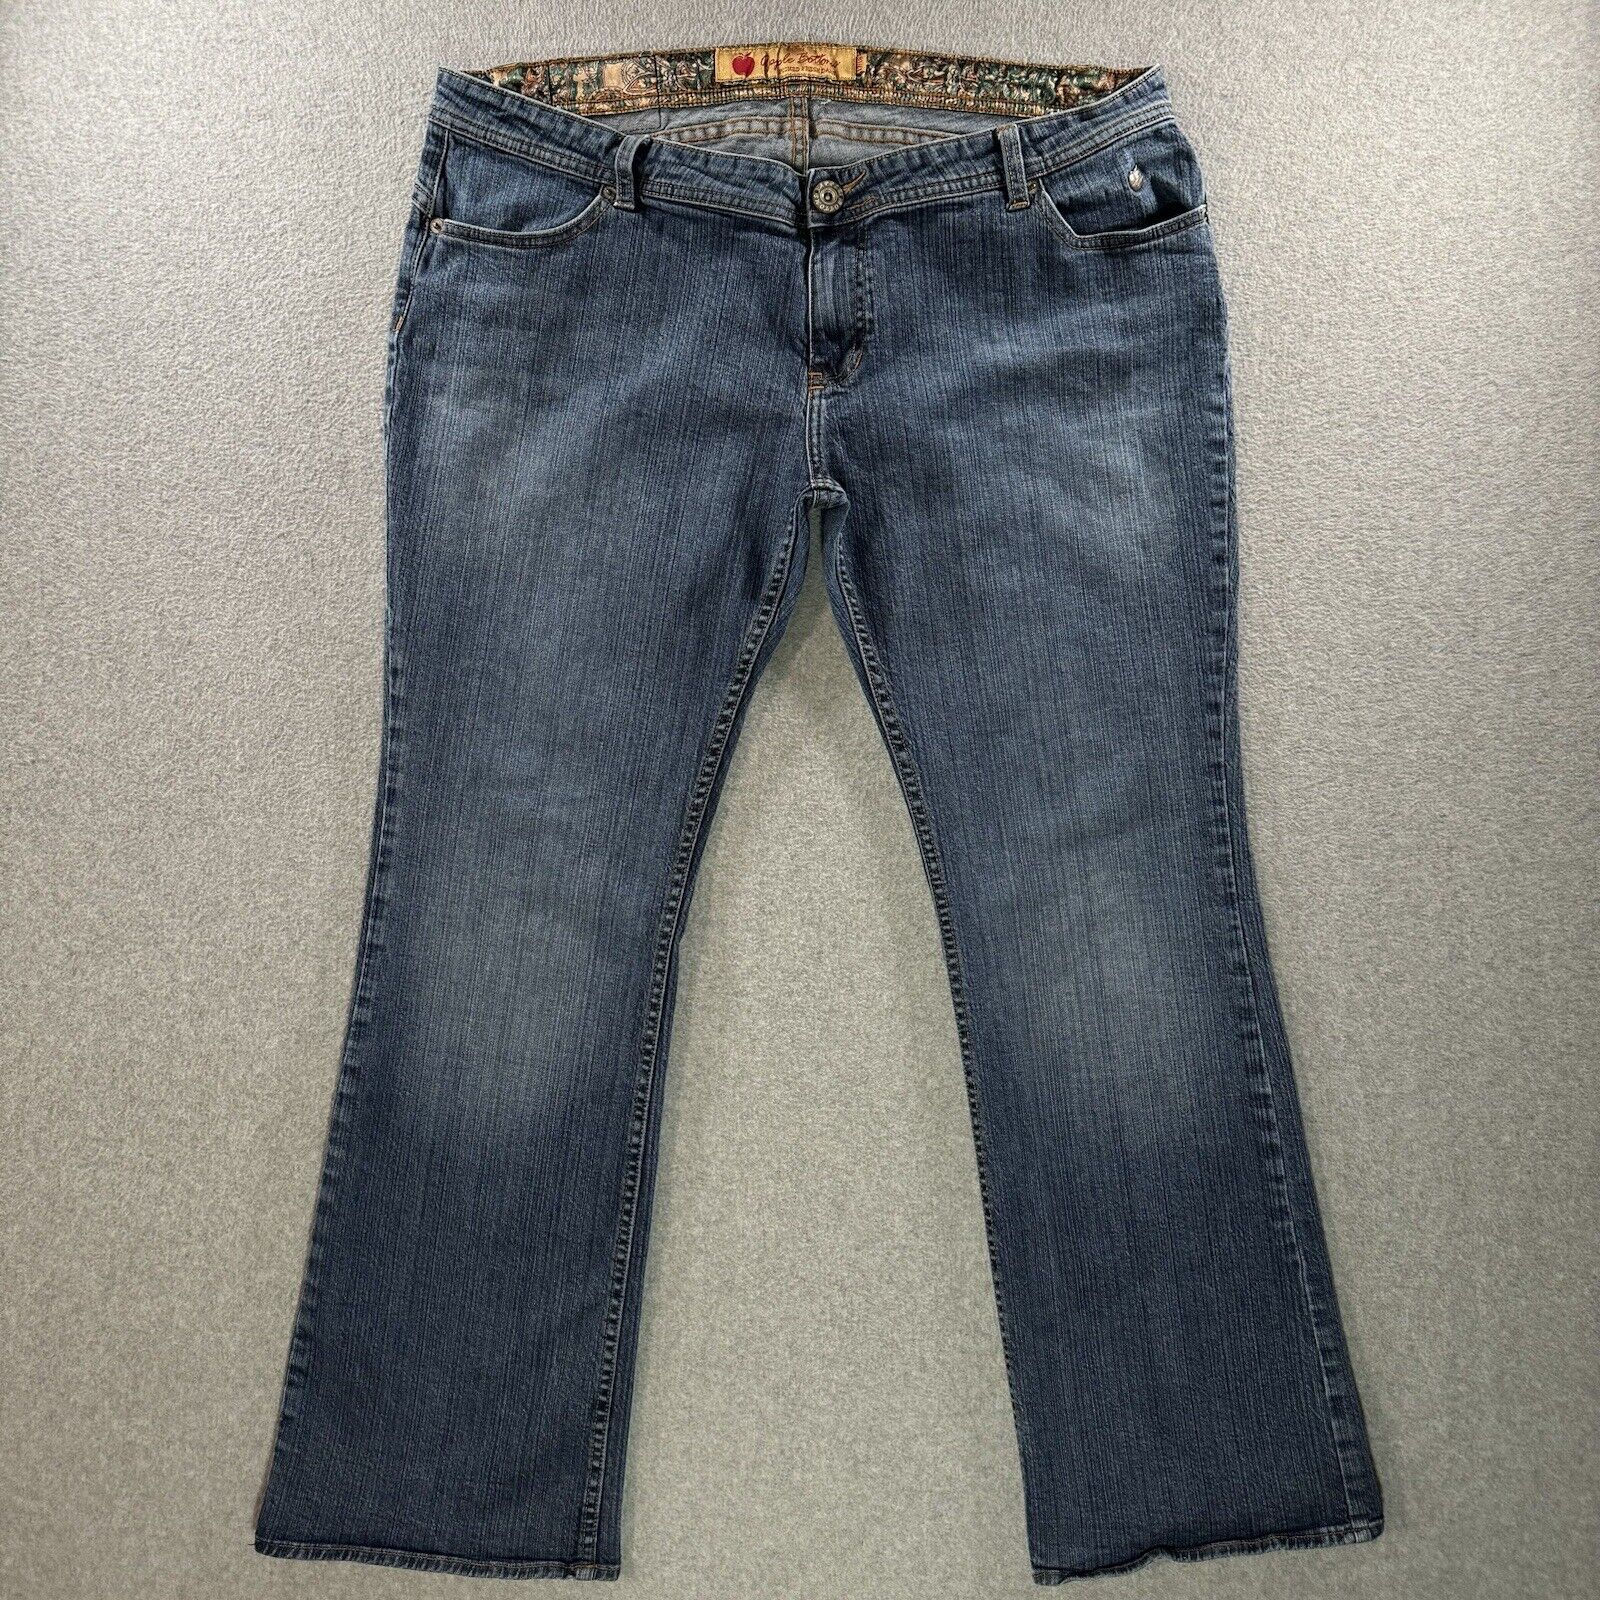 Apple Bottom Jeans Blue Stretch Denim Pants Embro… - image 2